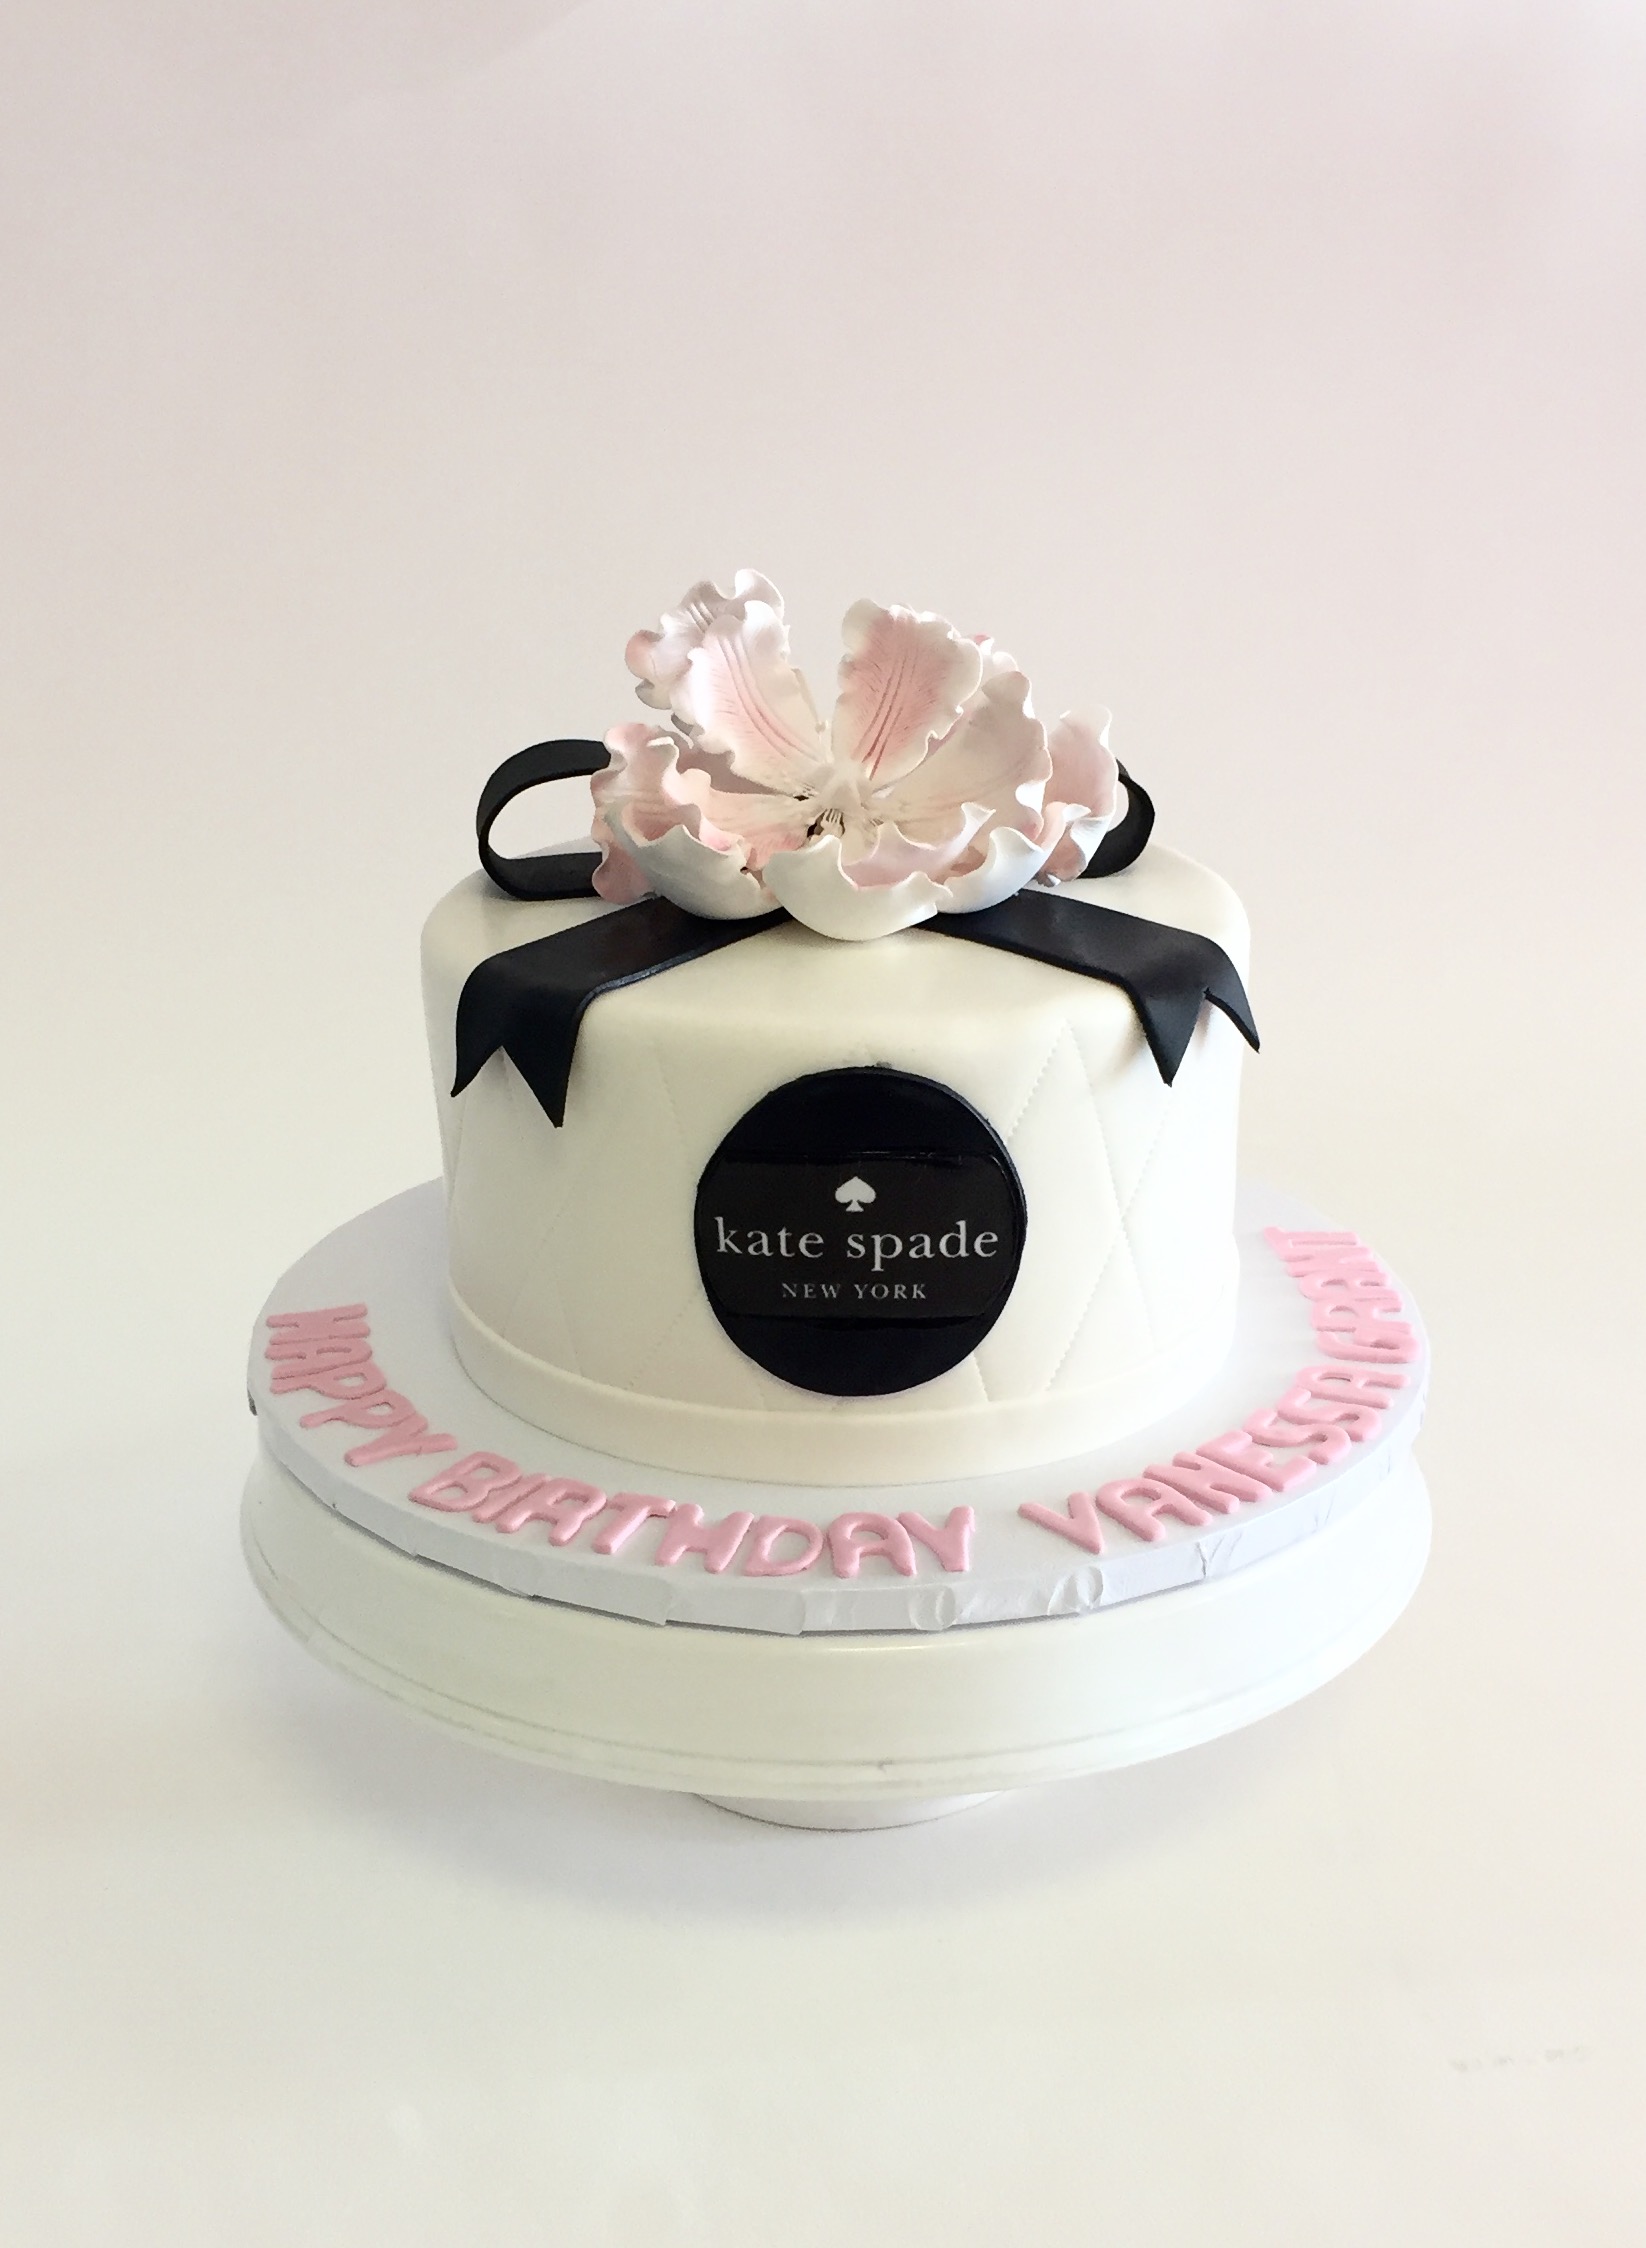 Women's Birthday Cakes - Nancy's Cake Designs